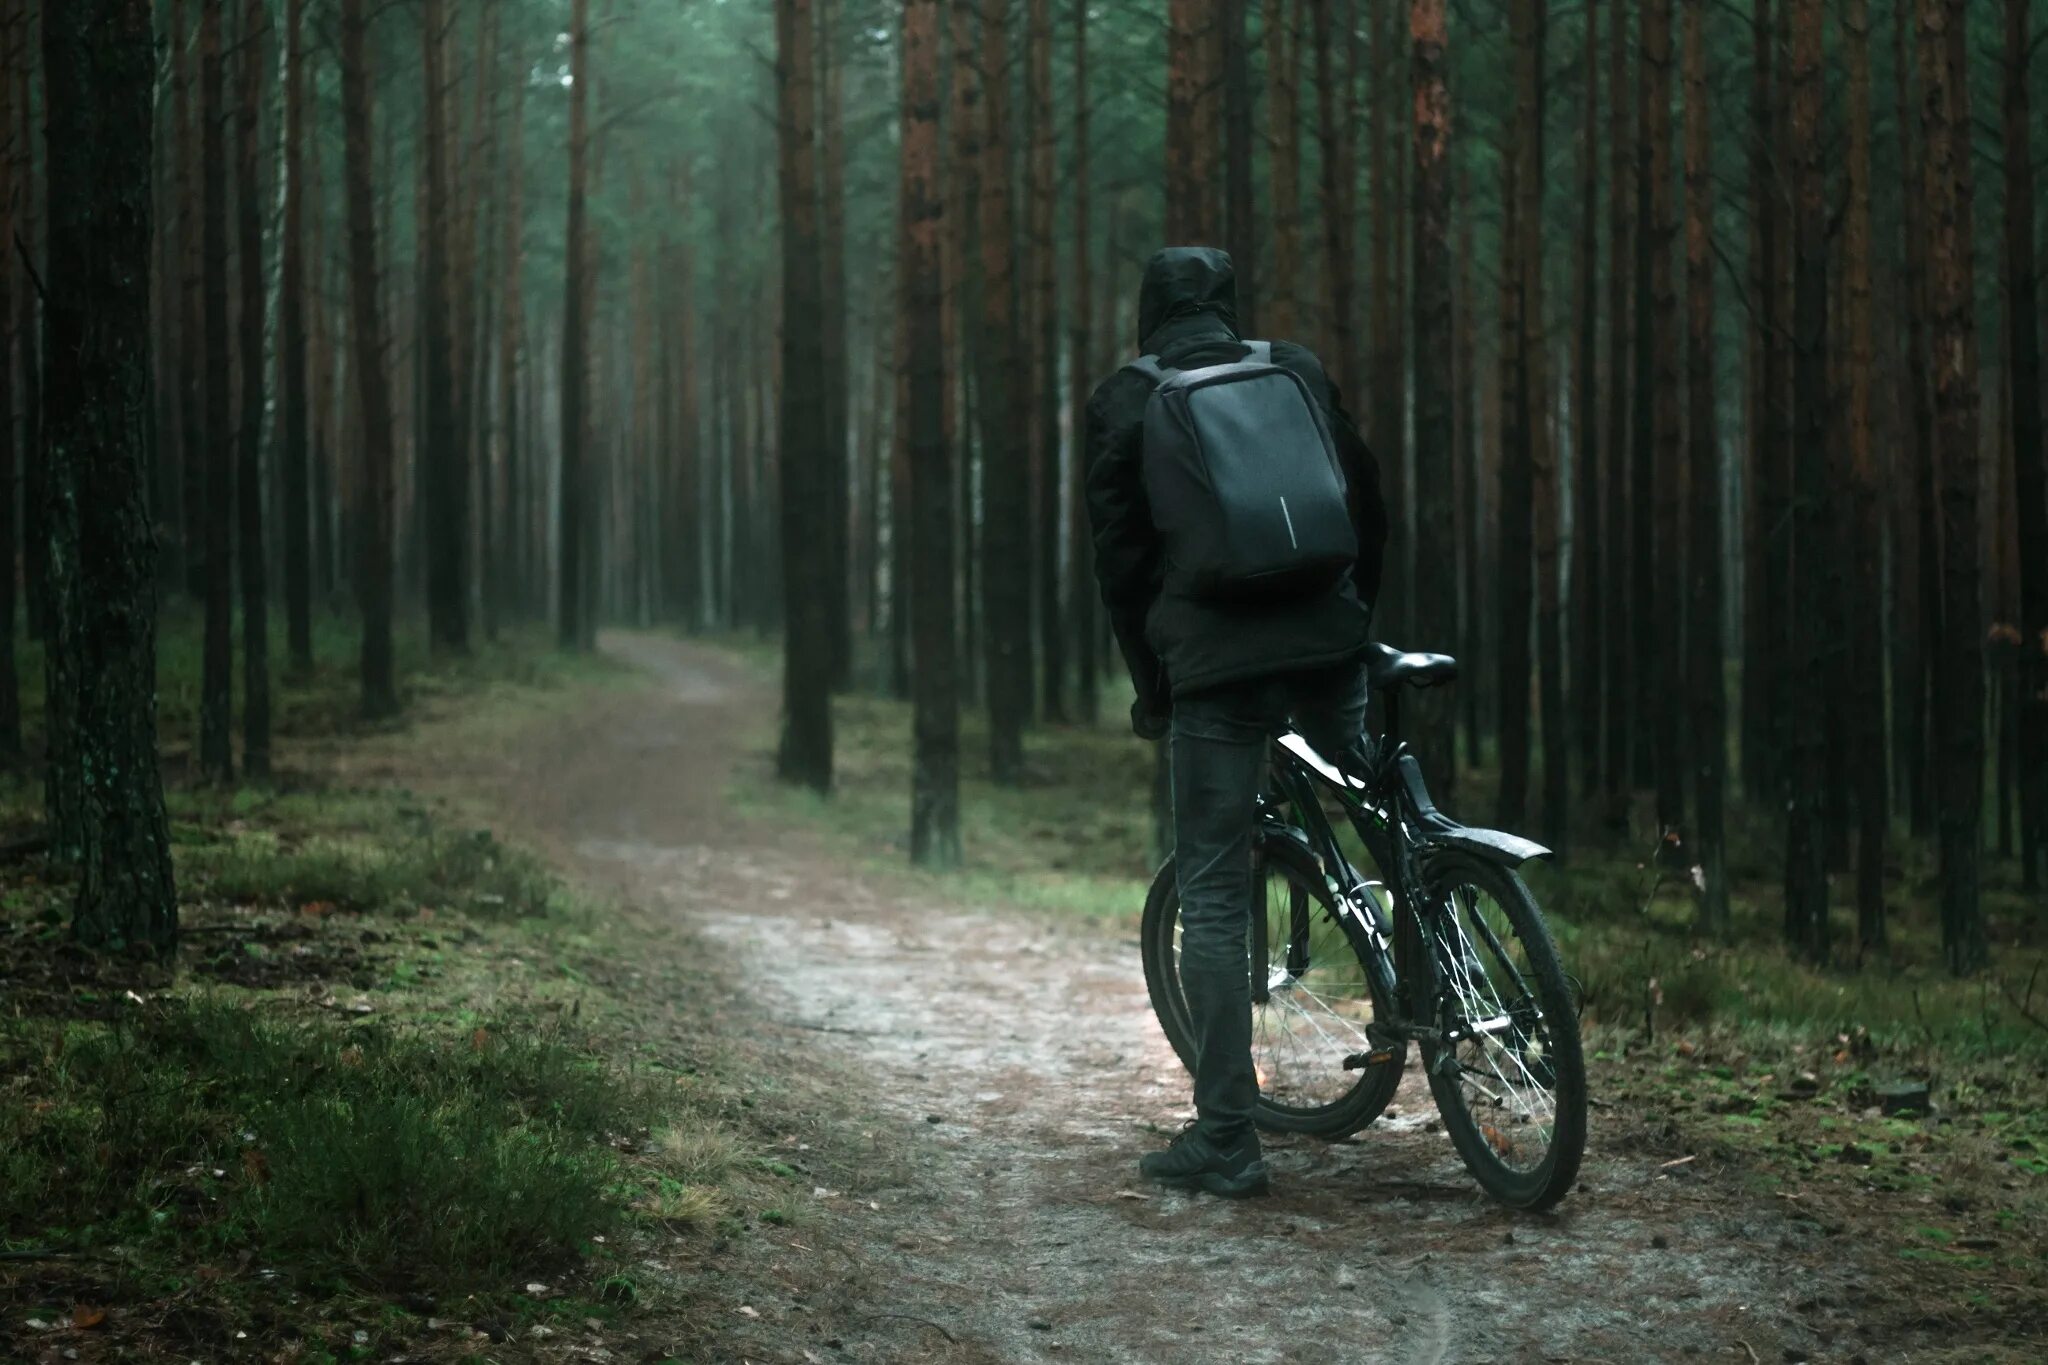 Лес велосипедист. Велосипедист в лесу. Прогулка на велосипеде по лесу. Мужчина на велосипеде. Велосипед в лесу.